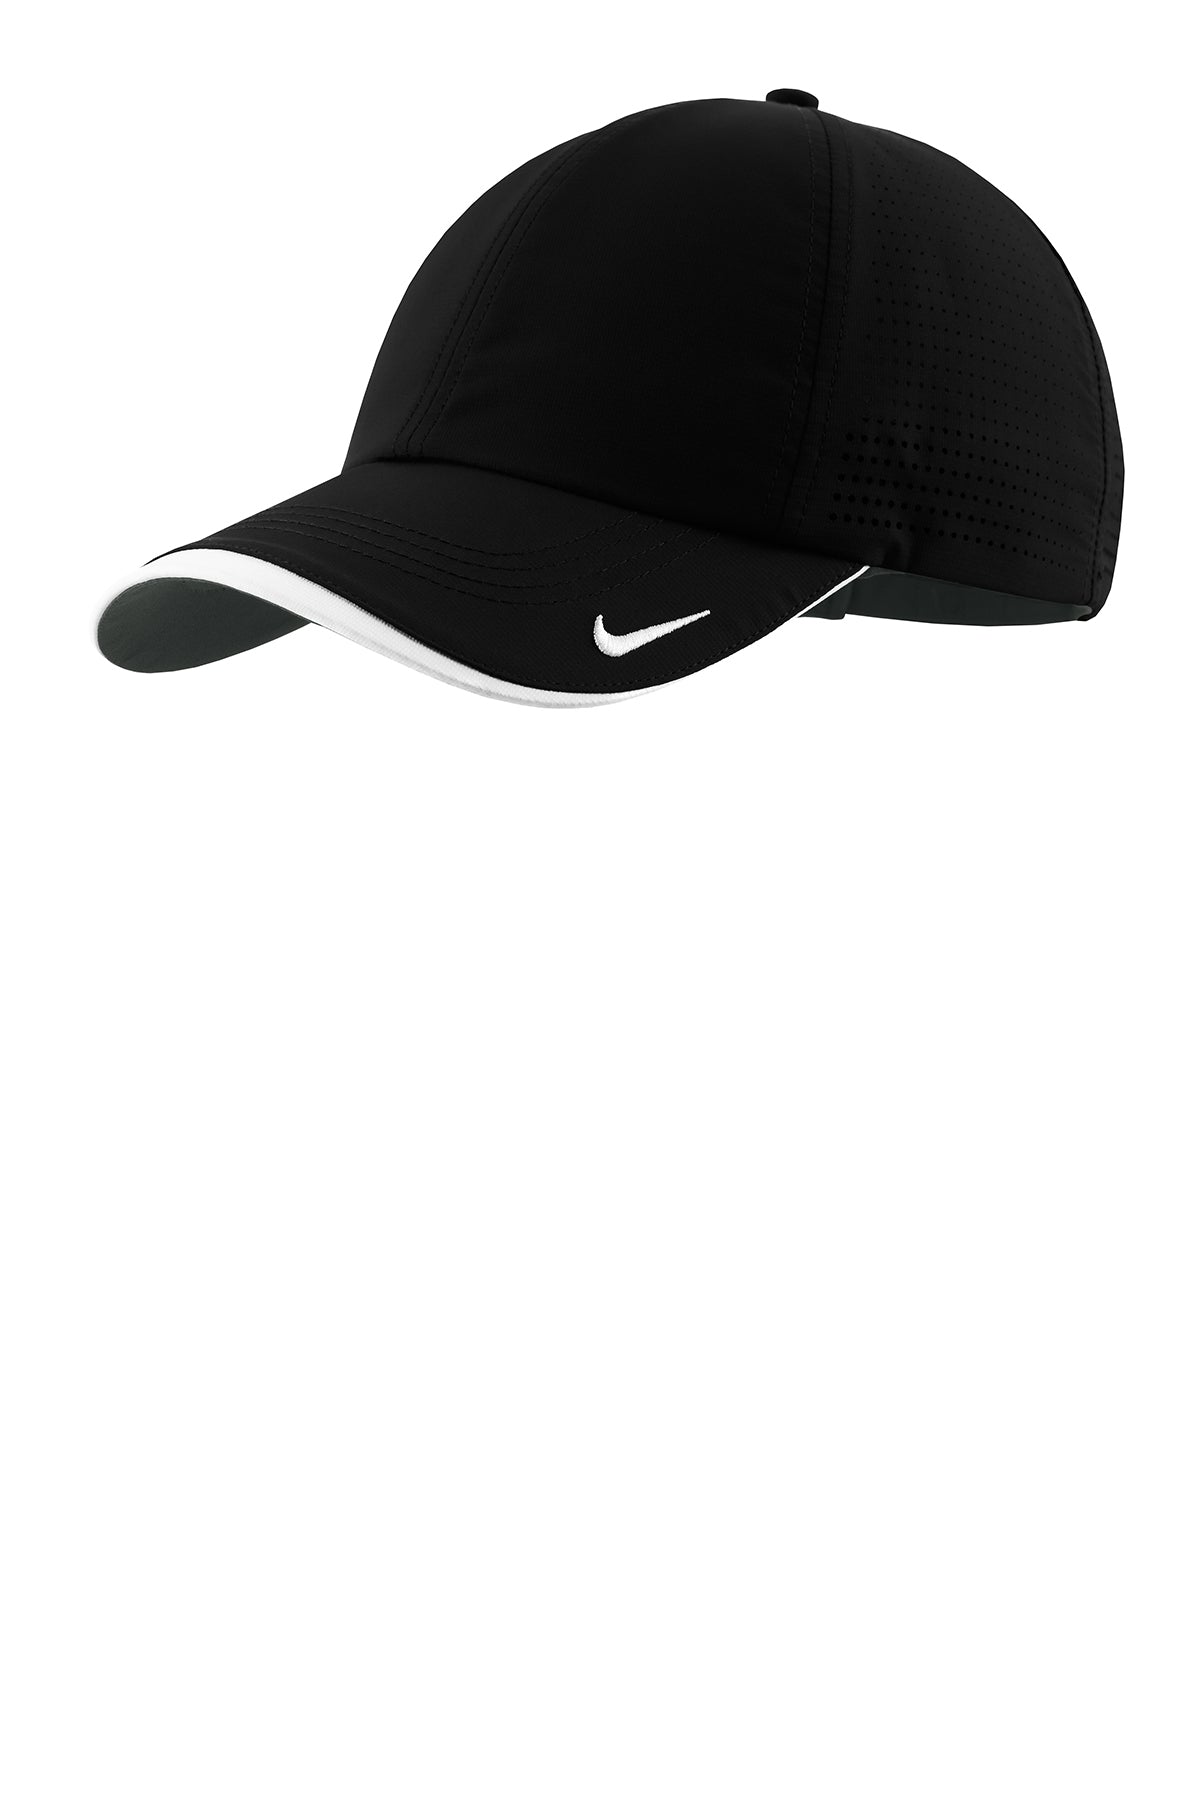 Nike Dri-FIT Swoosh Perforated Customized Caps, Black